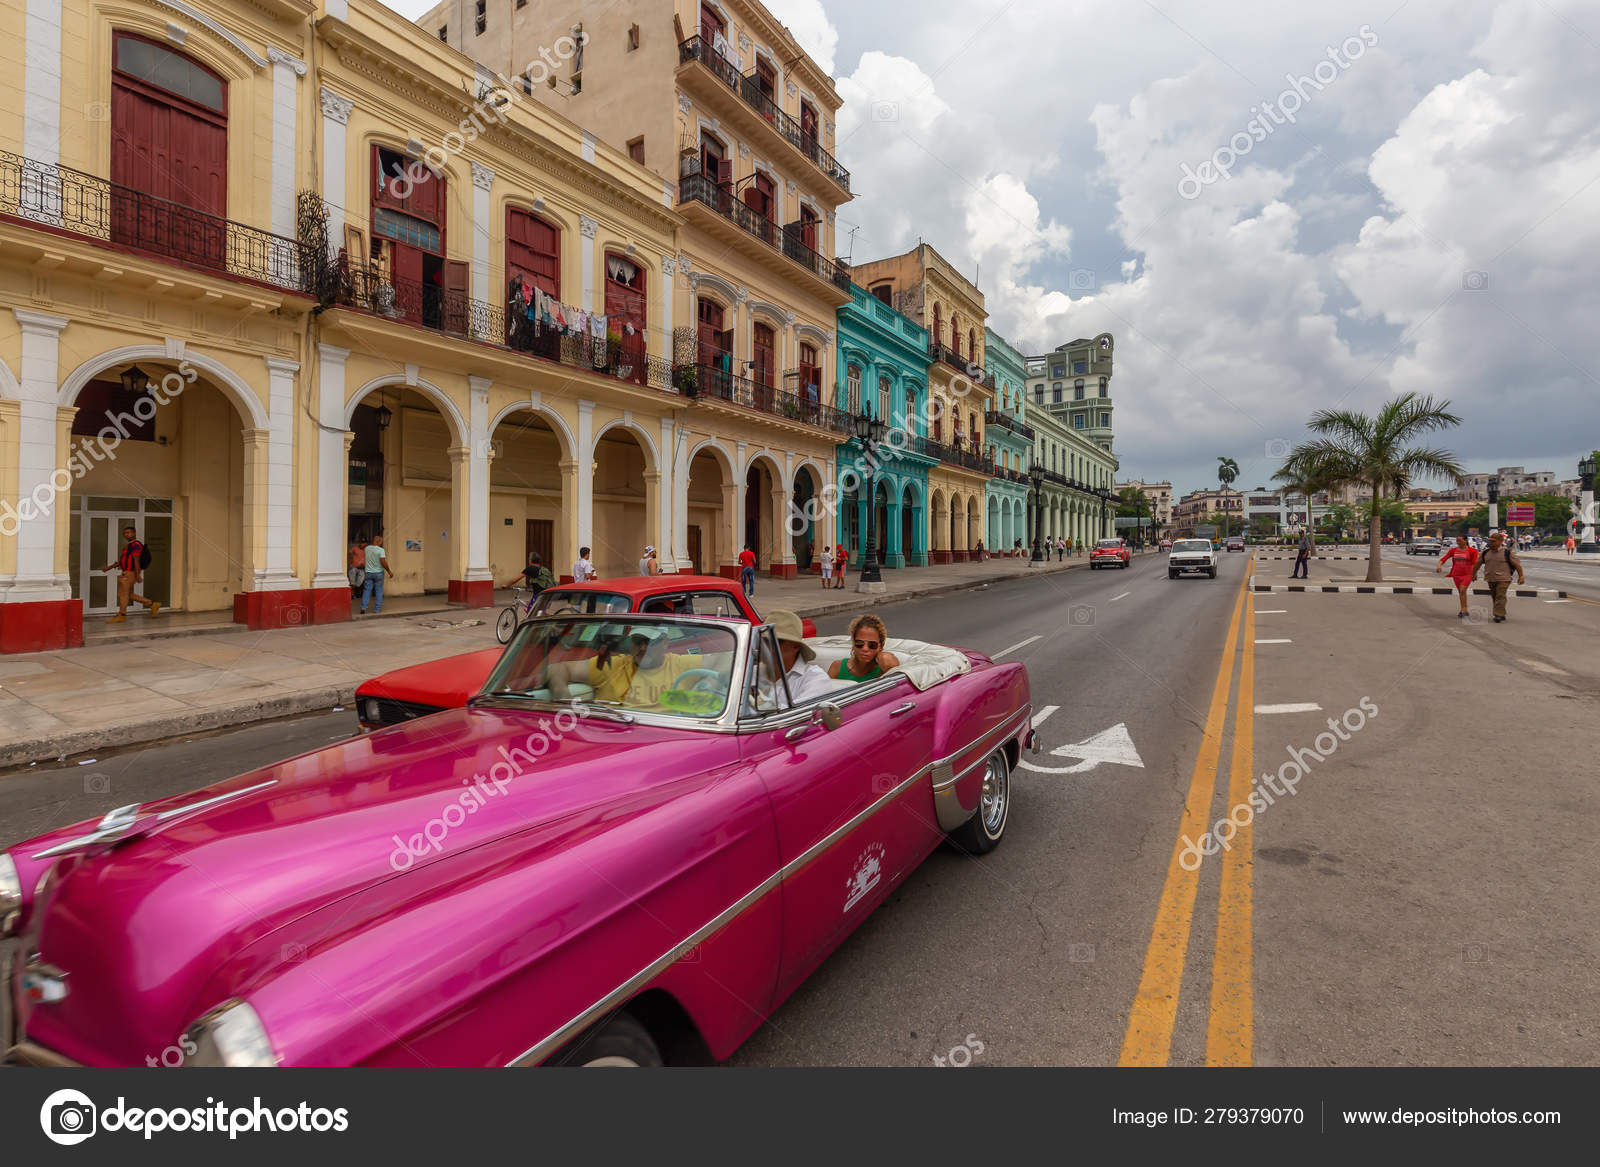 Havana Cuba Maj 2019 Classic Old Gaderne Den – Redaktionelle stock-fotos © edb3_16 #279379070